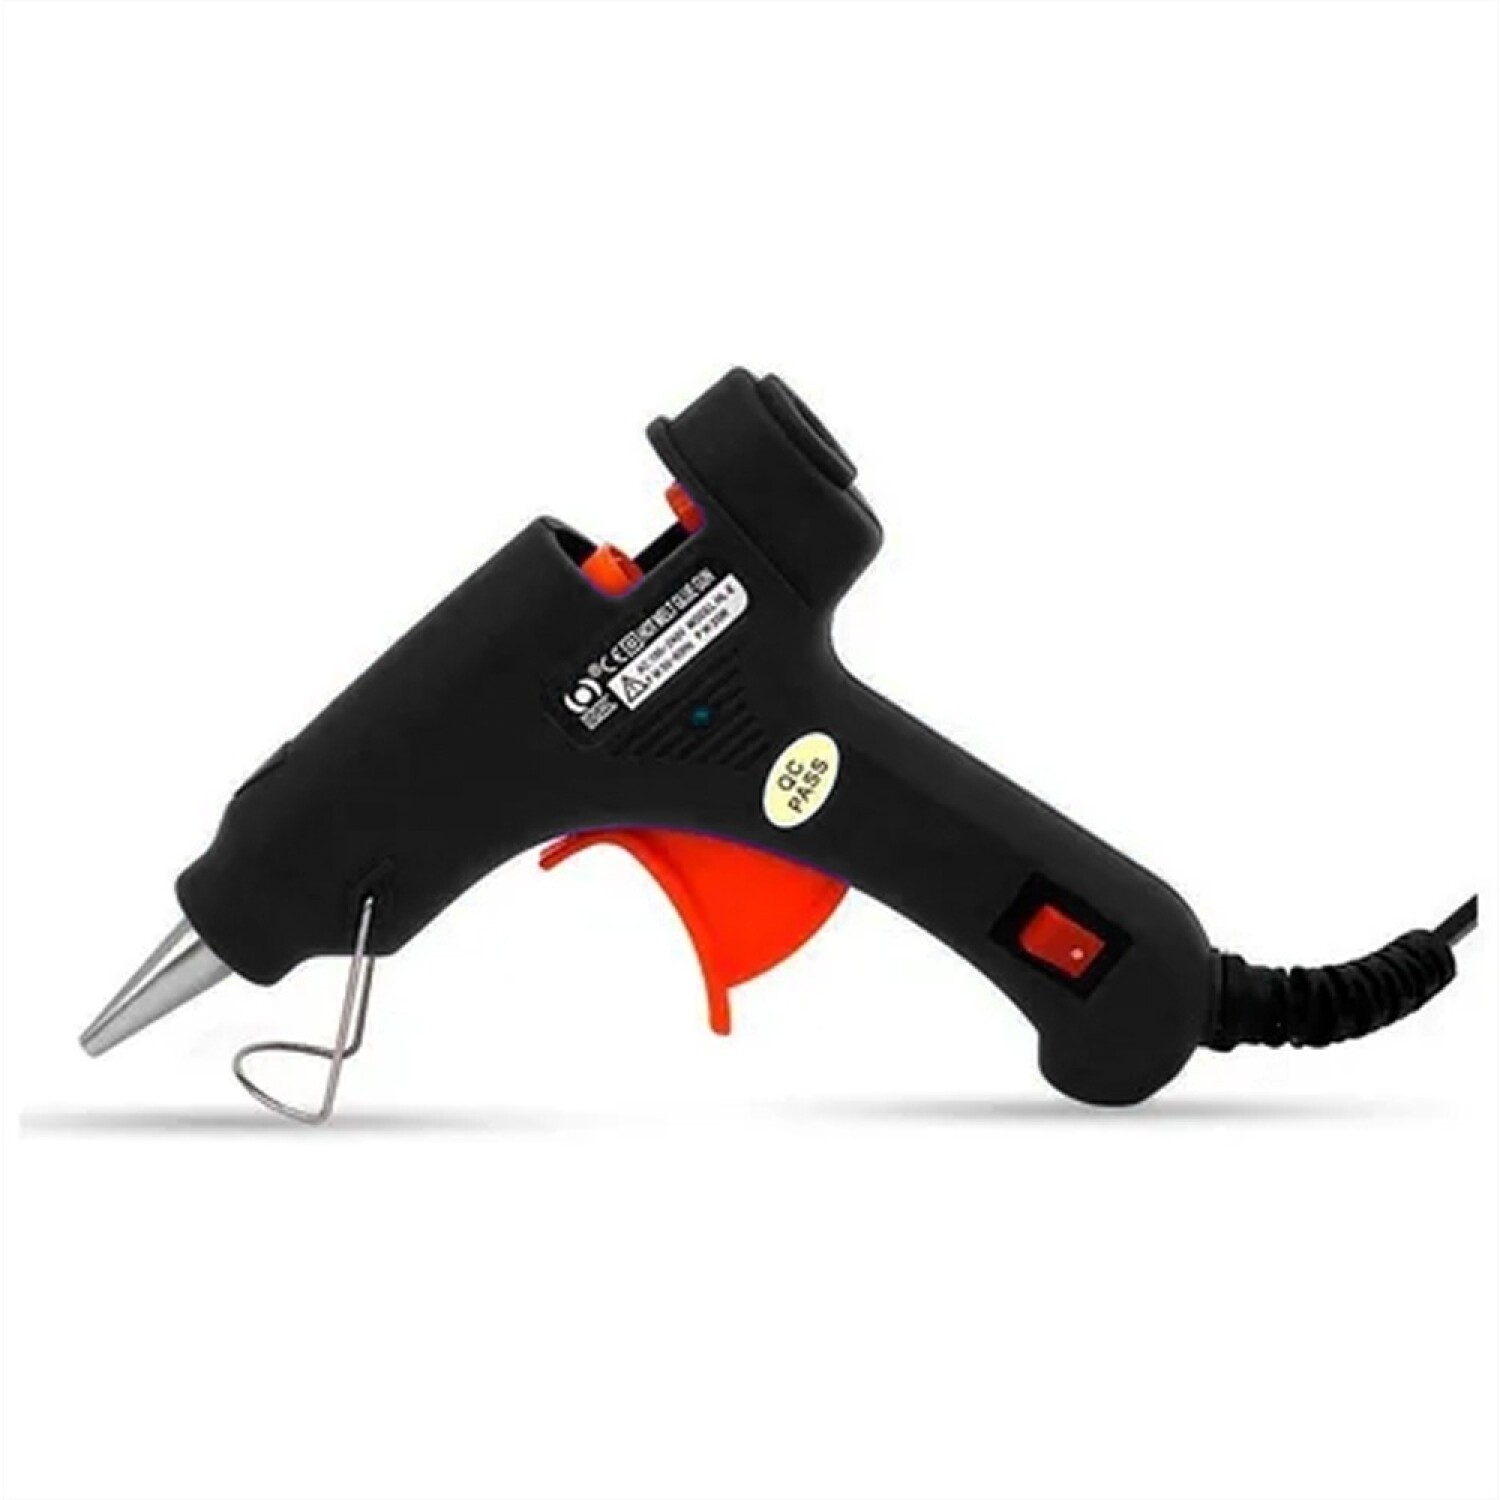 2320185 – Pistola de Silicona Profesional. Rojo/Negro